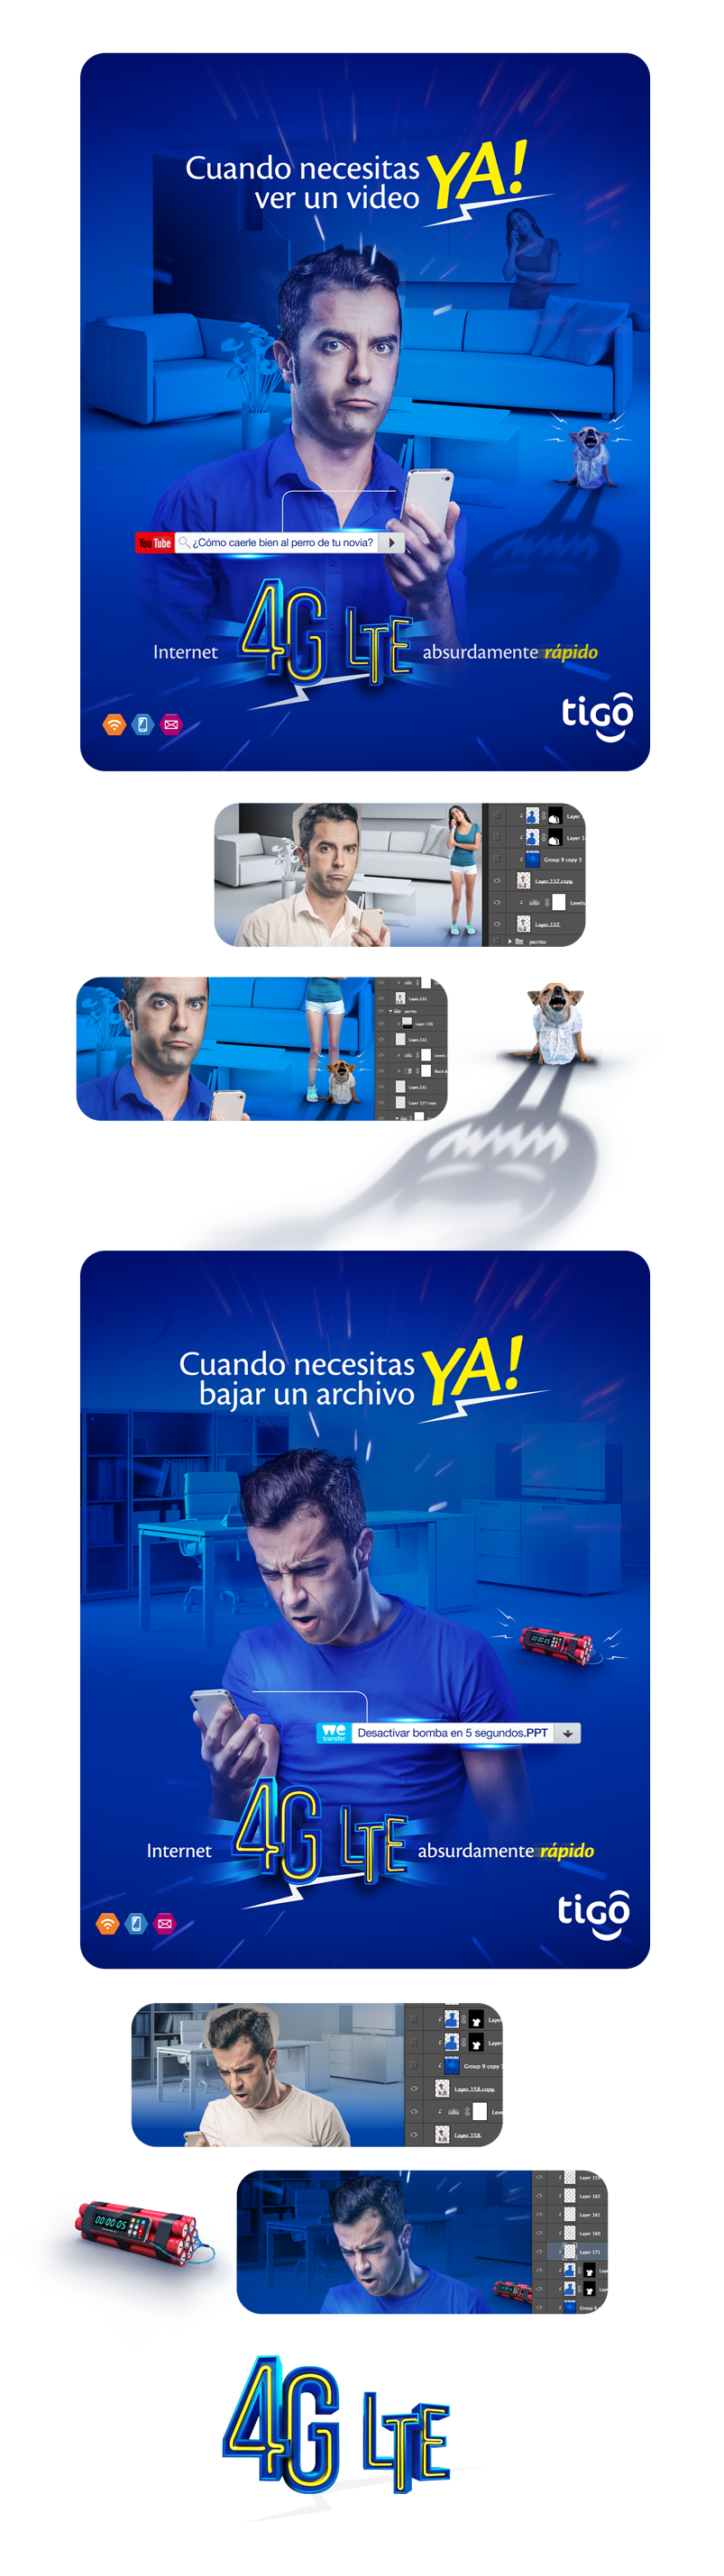 new speed smartphone 4g tigo Guatemala dog girlfriend situation bomb funny ad campaign